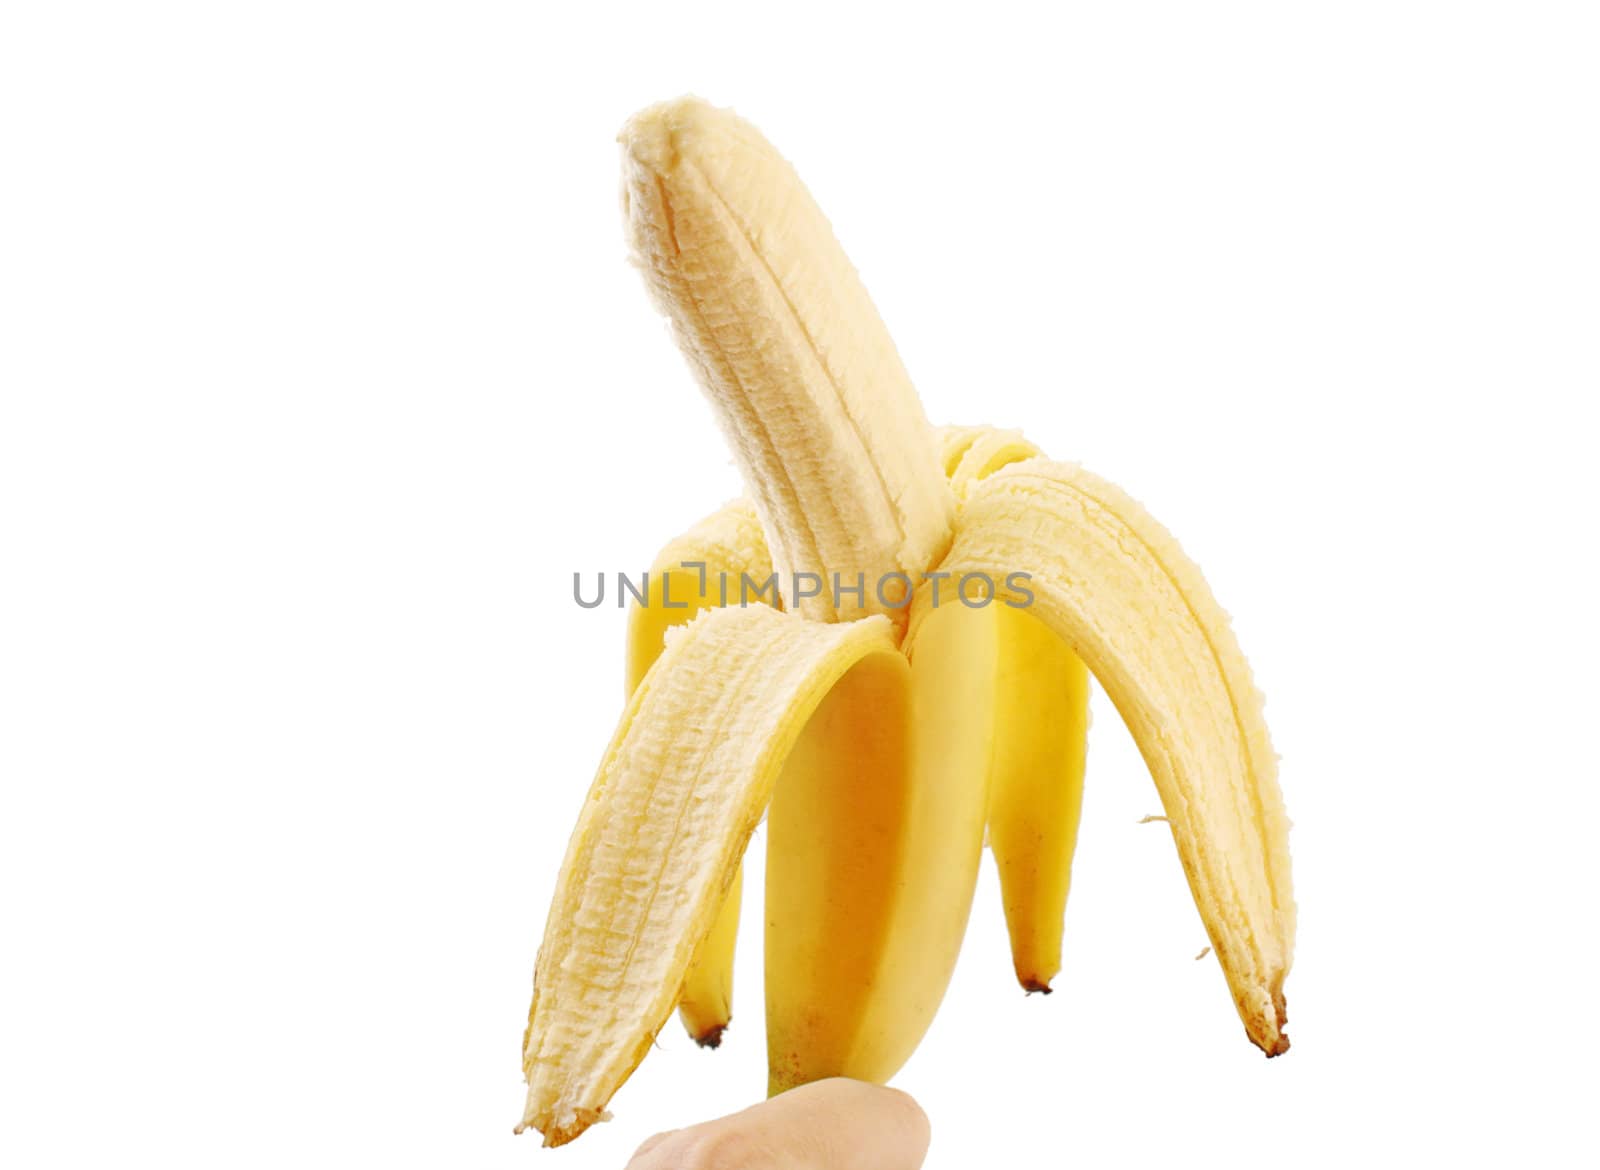 hand holding peeled banana over white